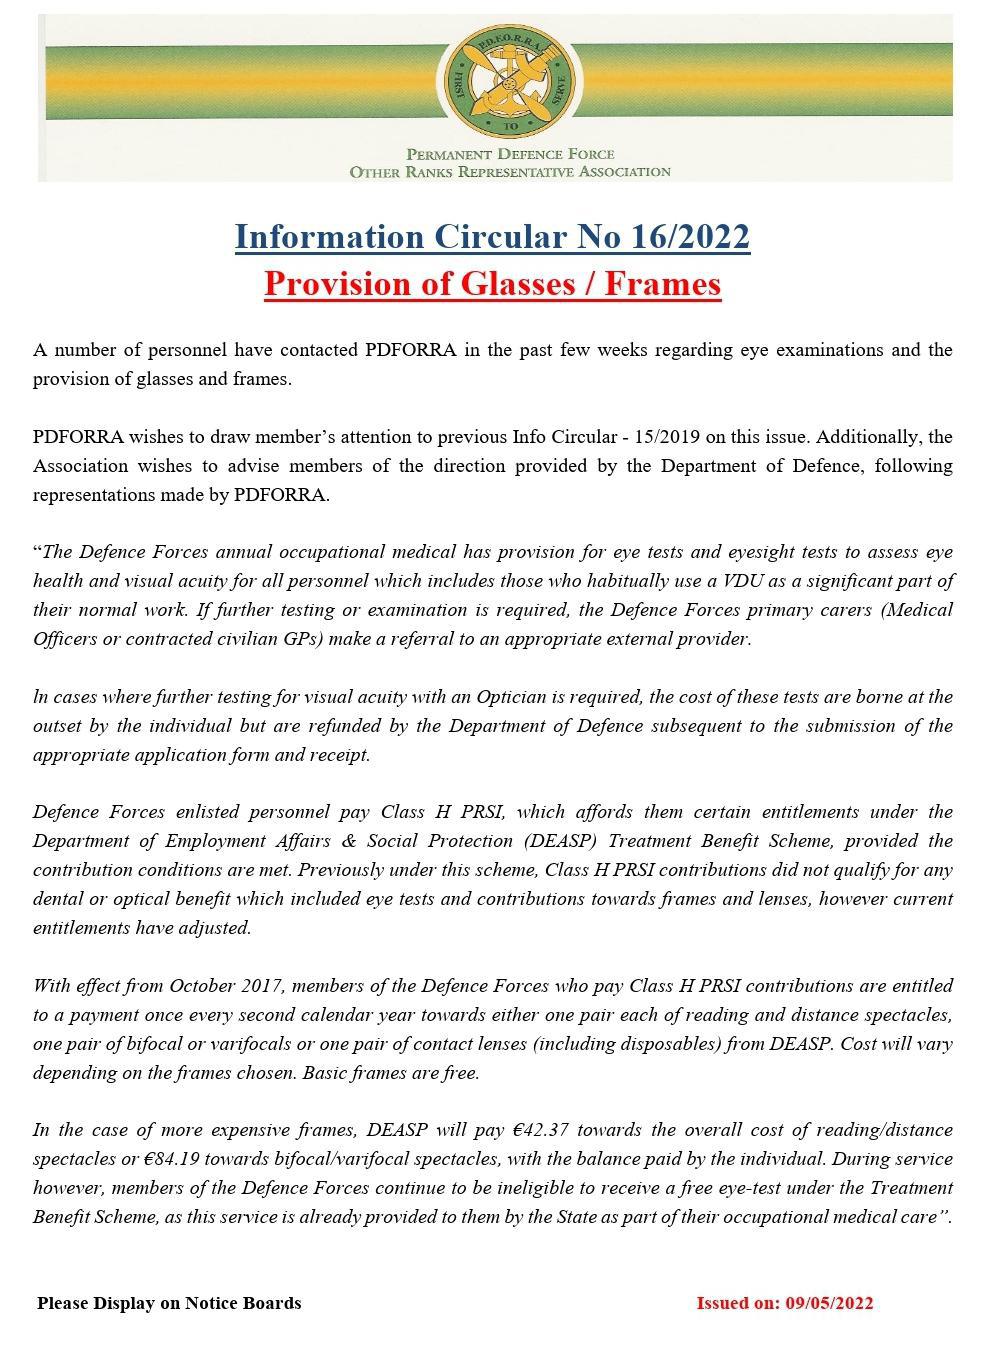 Information Circular No 16 of 22 - Provision of Glasses/Frames